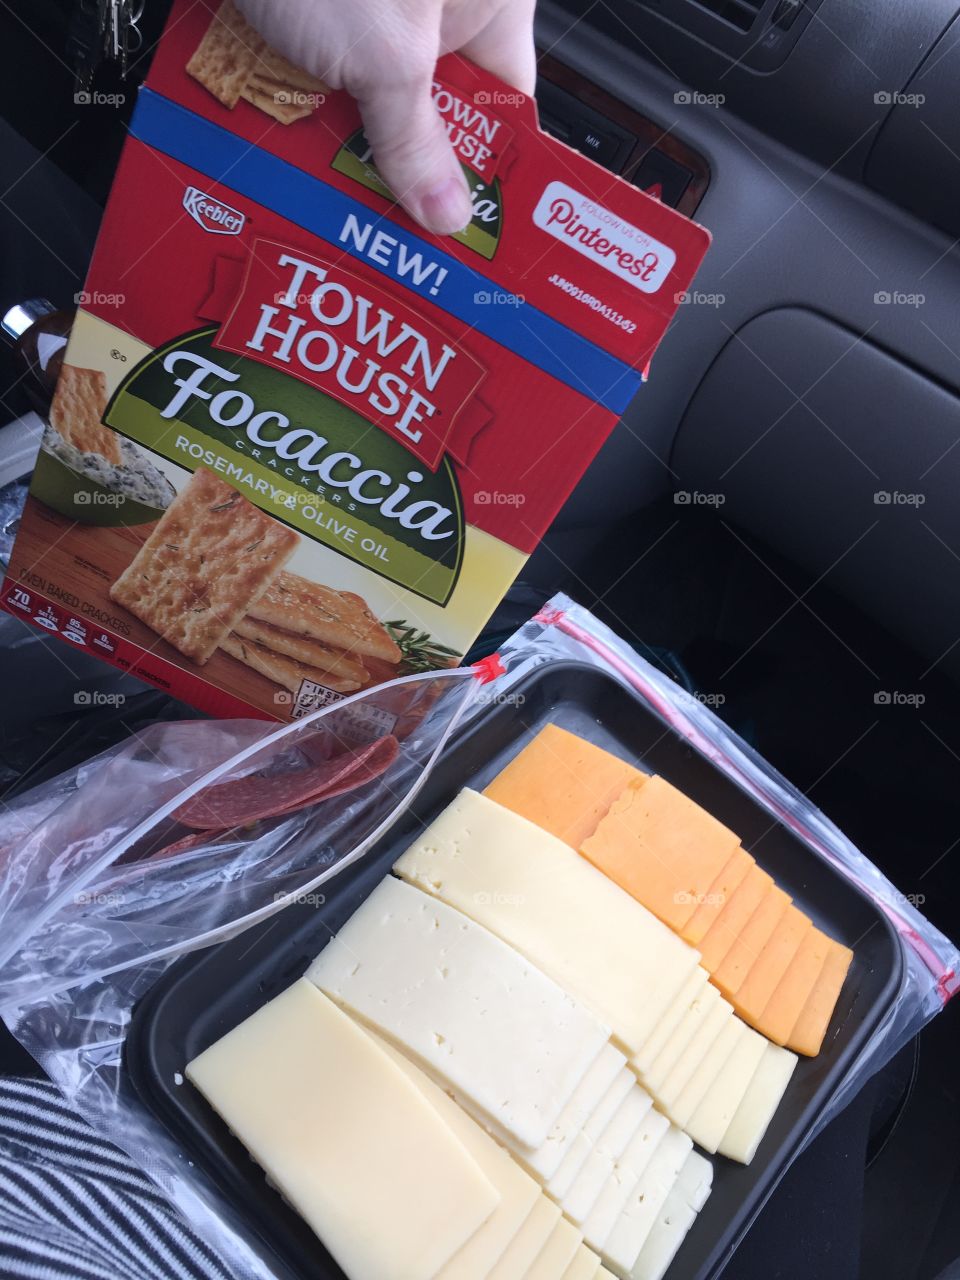 Car traveling food
